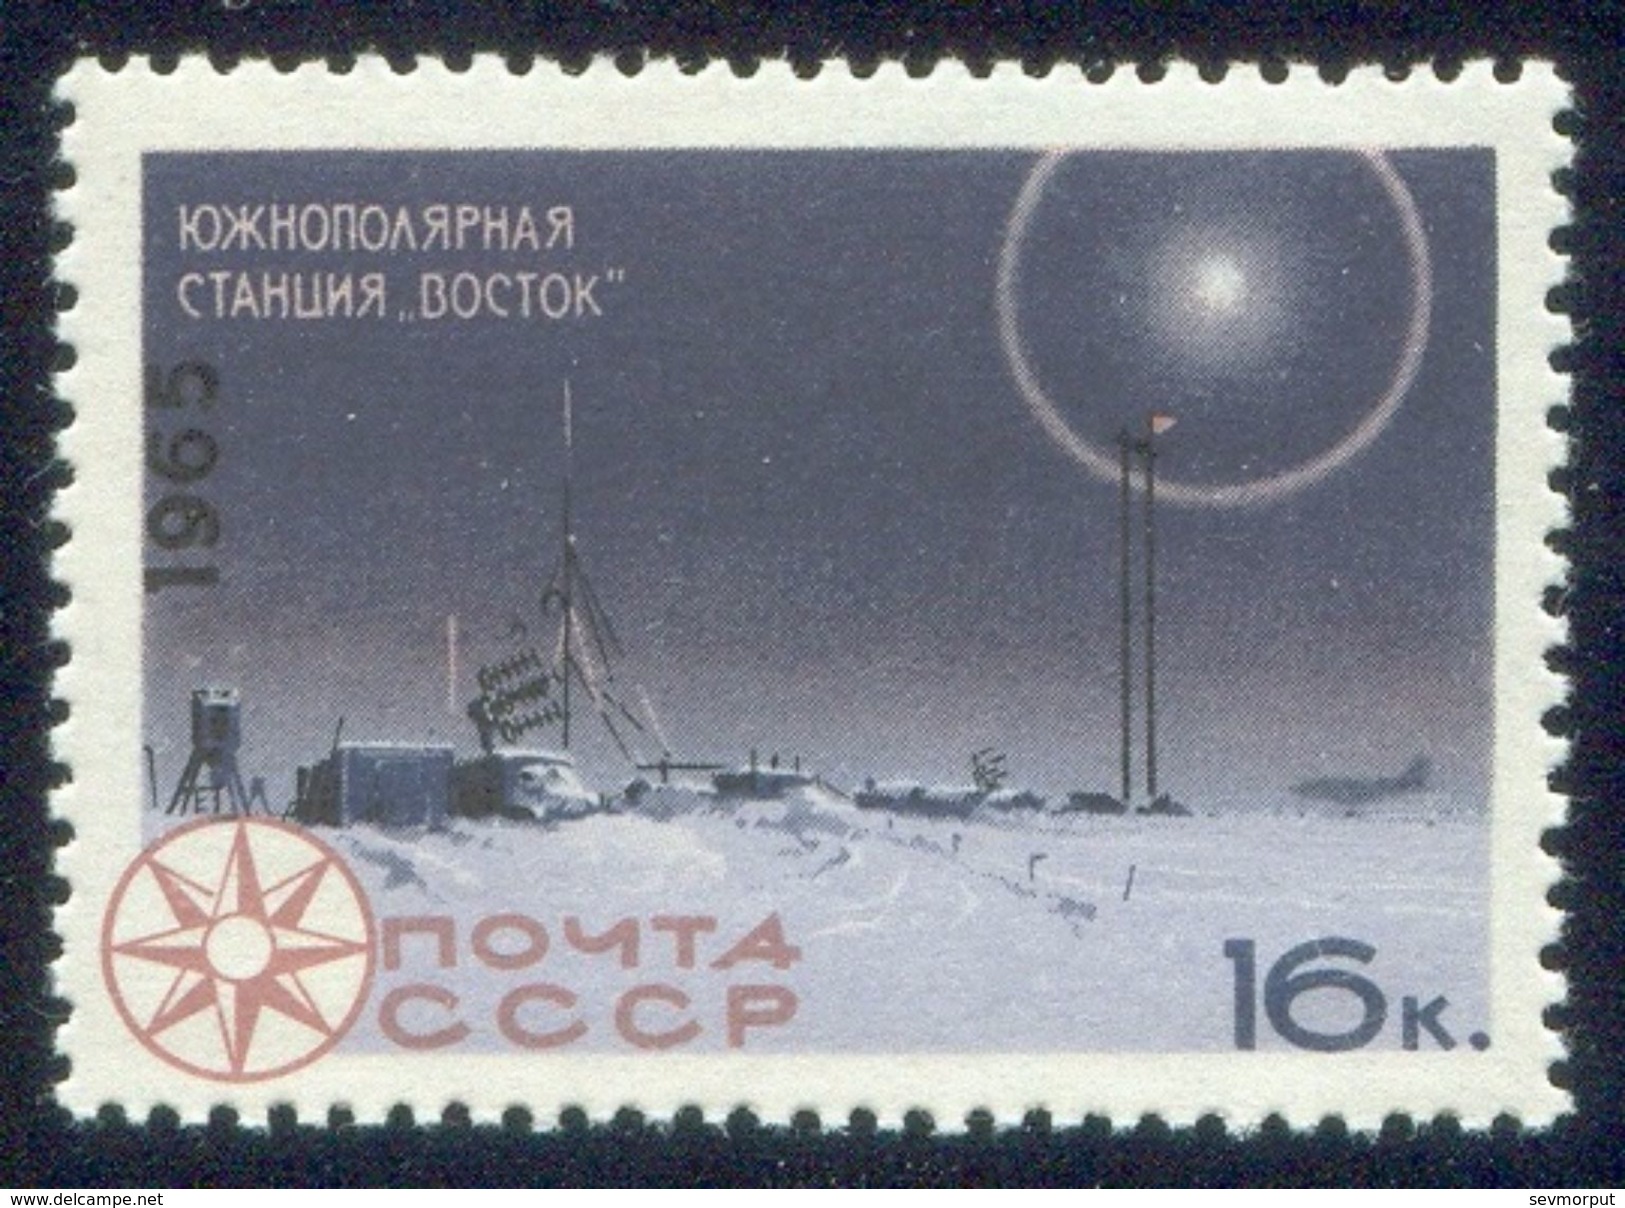 RUSSIA 1965 USSR Stamp MNH ** VF Mi 3129 "VOSTOK" ANTARCTIC RESEARCH SCIENCE STATION METEO CLIMATE ANTARCTIQUE POLAIRE - Ungebraucht